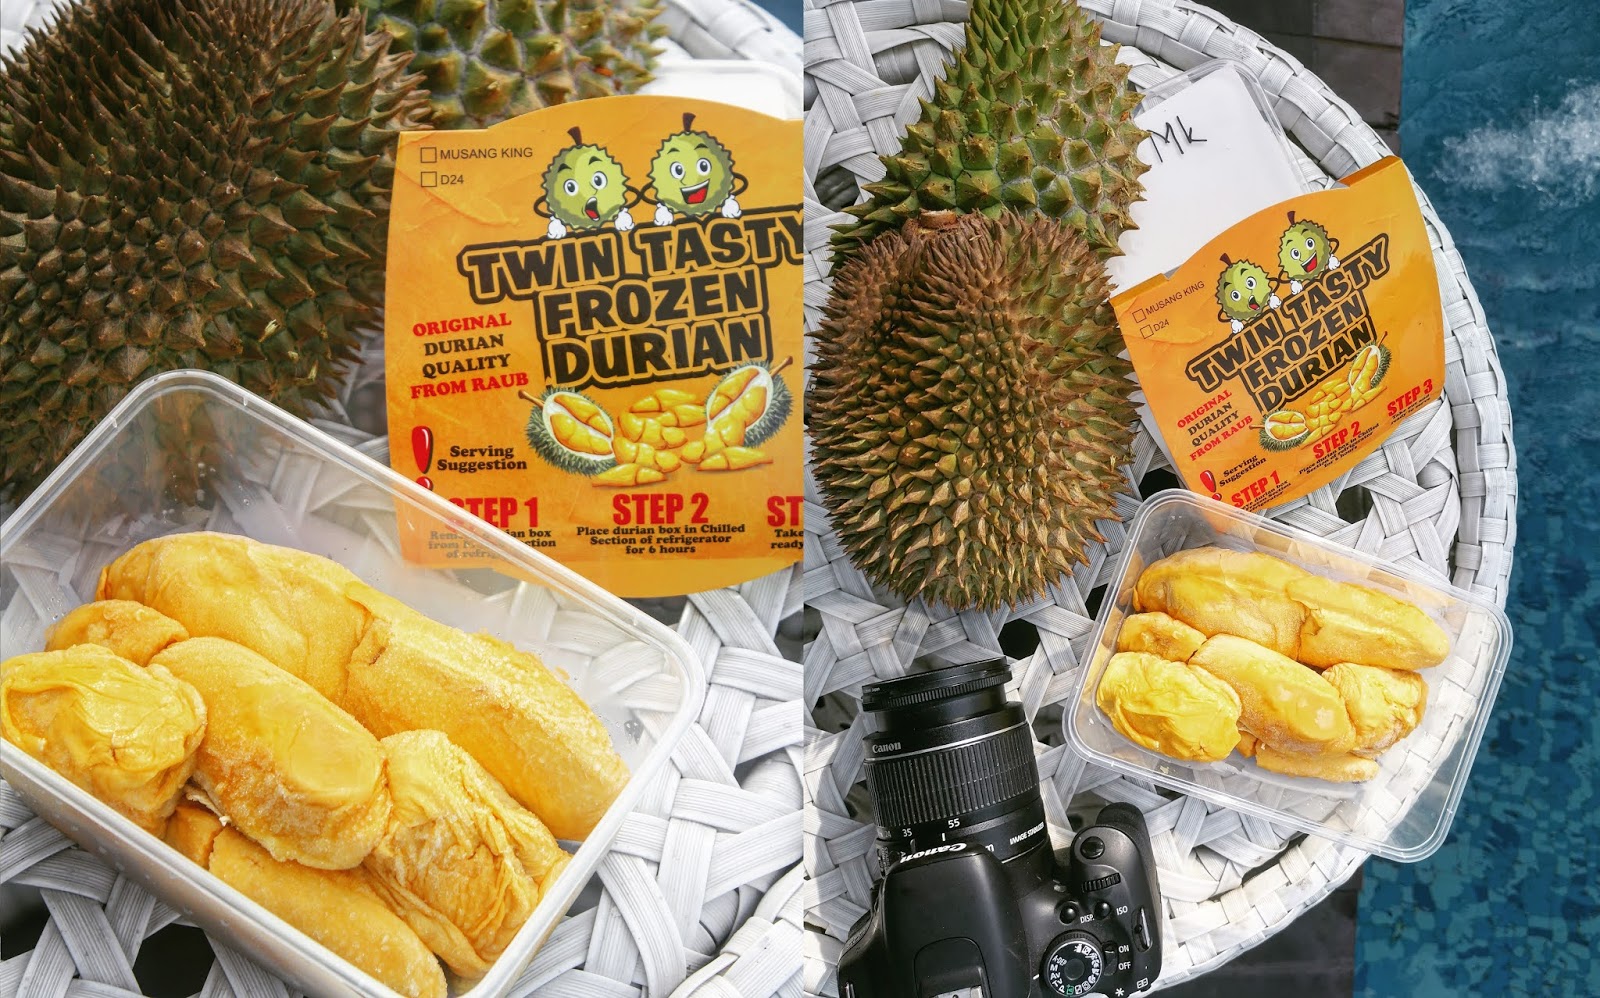 Ezy durian shah alam